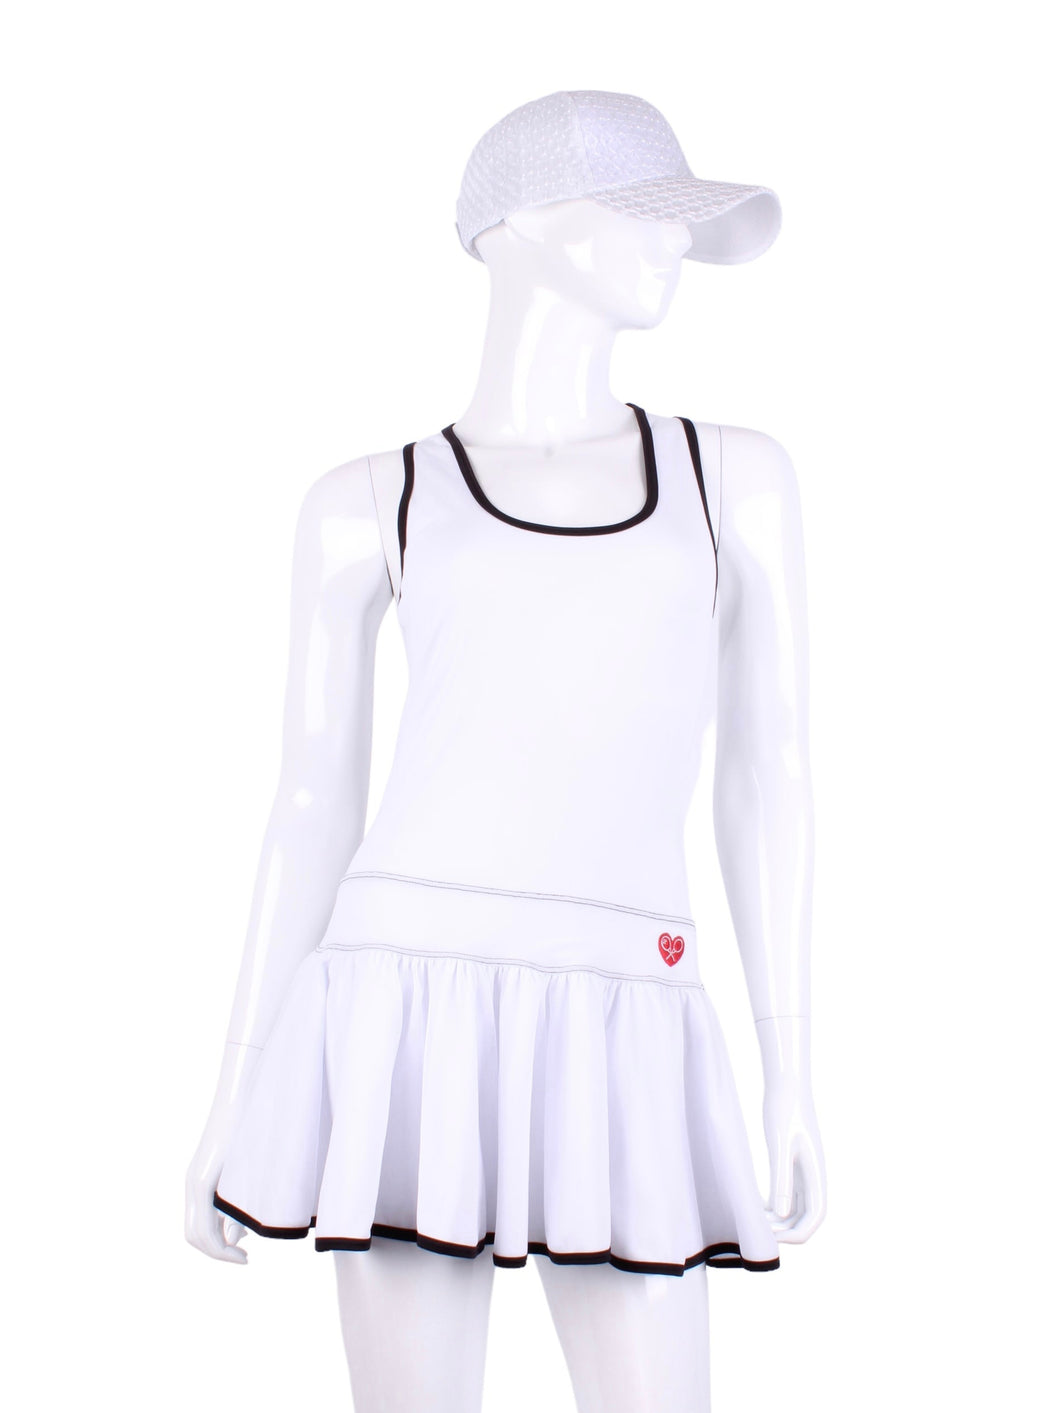 V1 White With White Mesh & Black Trim Sandra Dee Court To Cocktails Tennis Dress